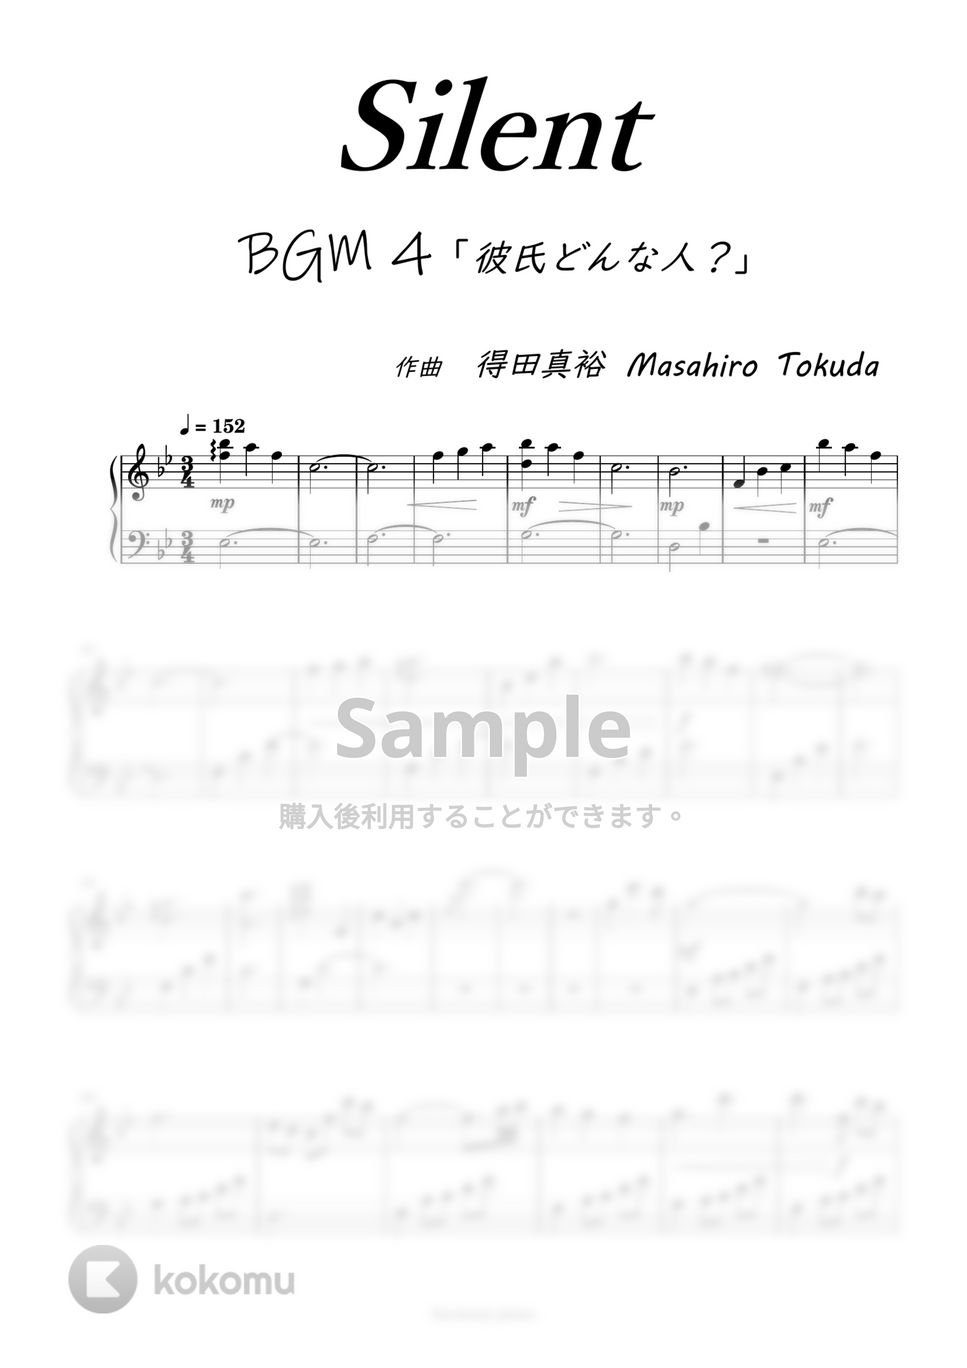 silent - BGM「切ない三角関係」 (目黒蓮×川口春奈) by harmony piano